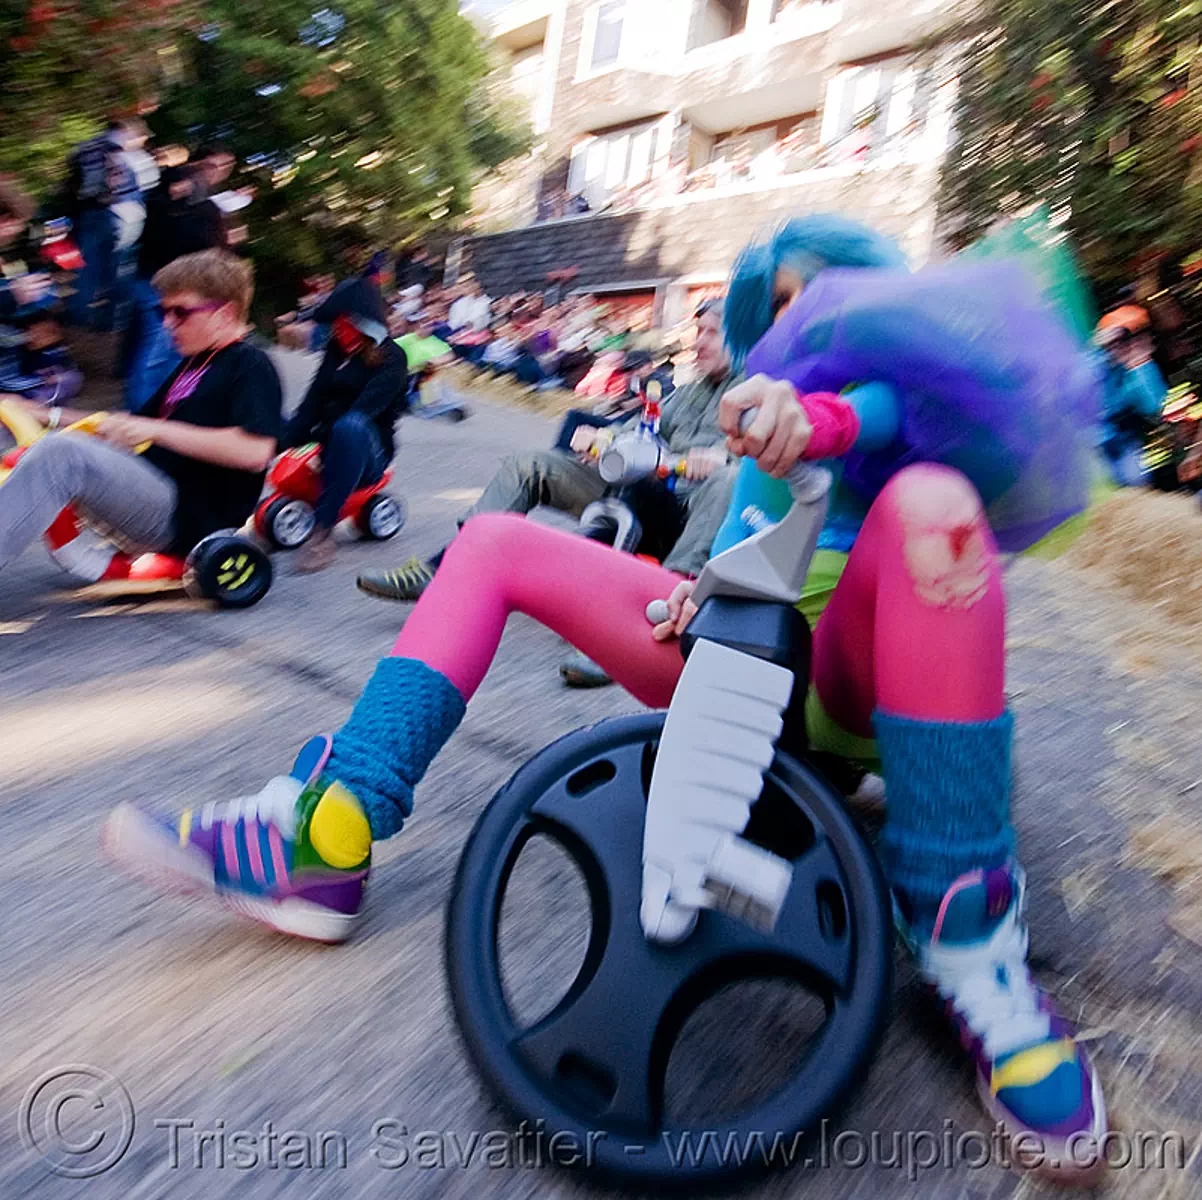 BYOBW - "bring your own big wheel" race - toy tricycles (san francisco), big wheel, blue wig, byobw 2011, drift trikes, moving fast, pink tights, potrero hill, race, speed, speeding, toy tricycle, toy trike, trike-drifting, tutu, woman